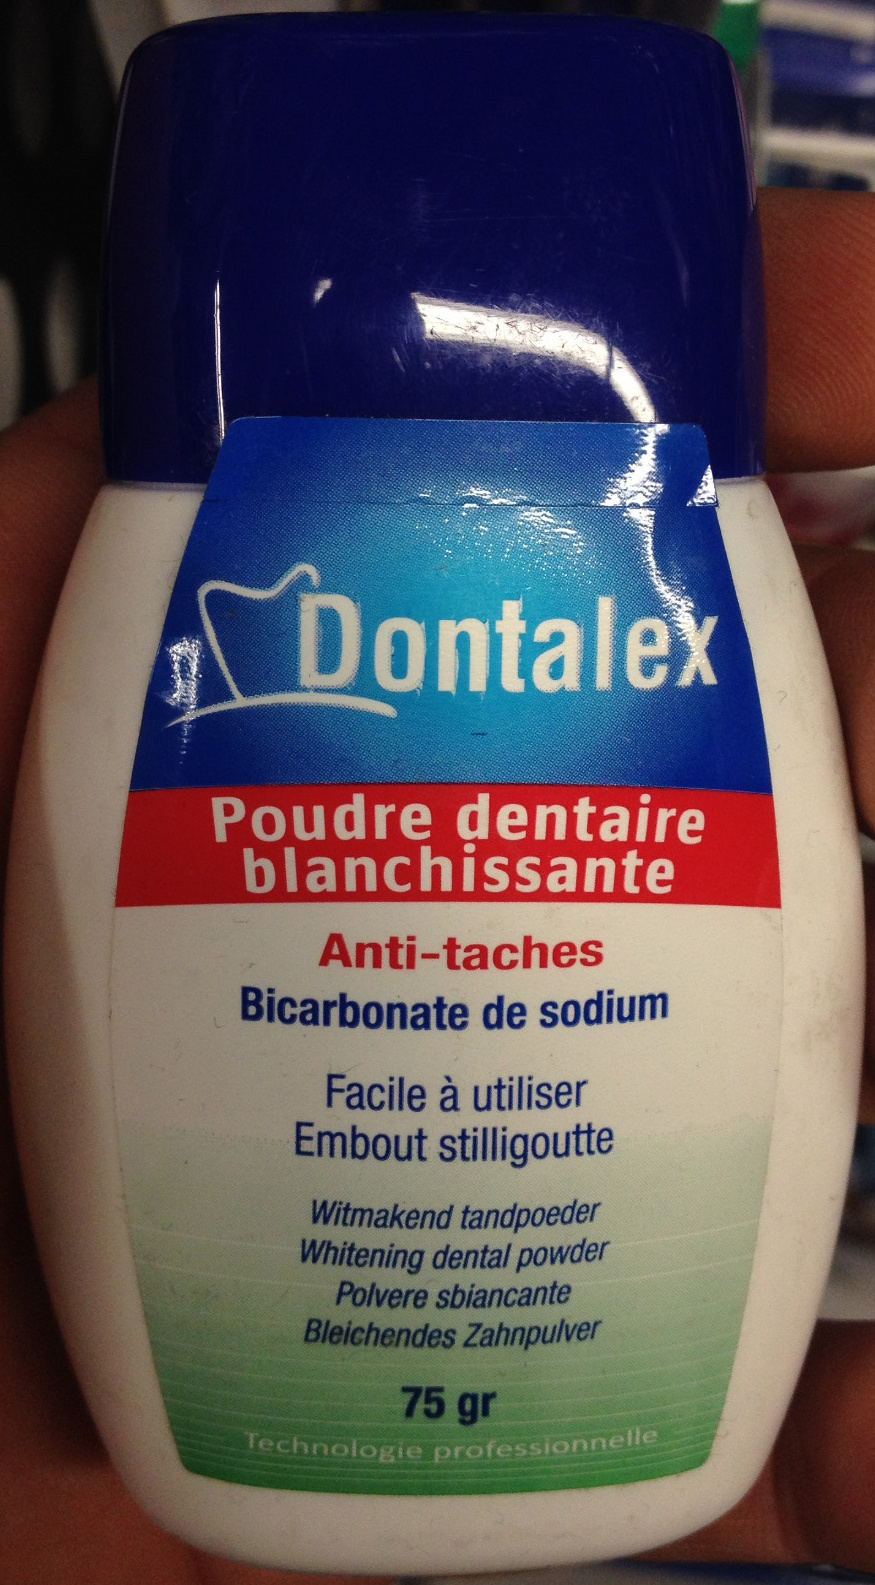 Poudre dentaire blanchissante - Product - fr